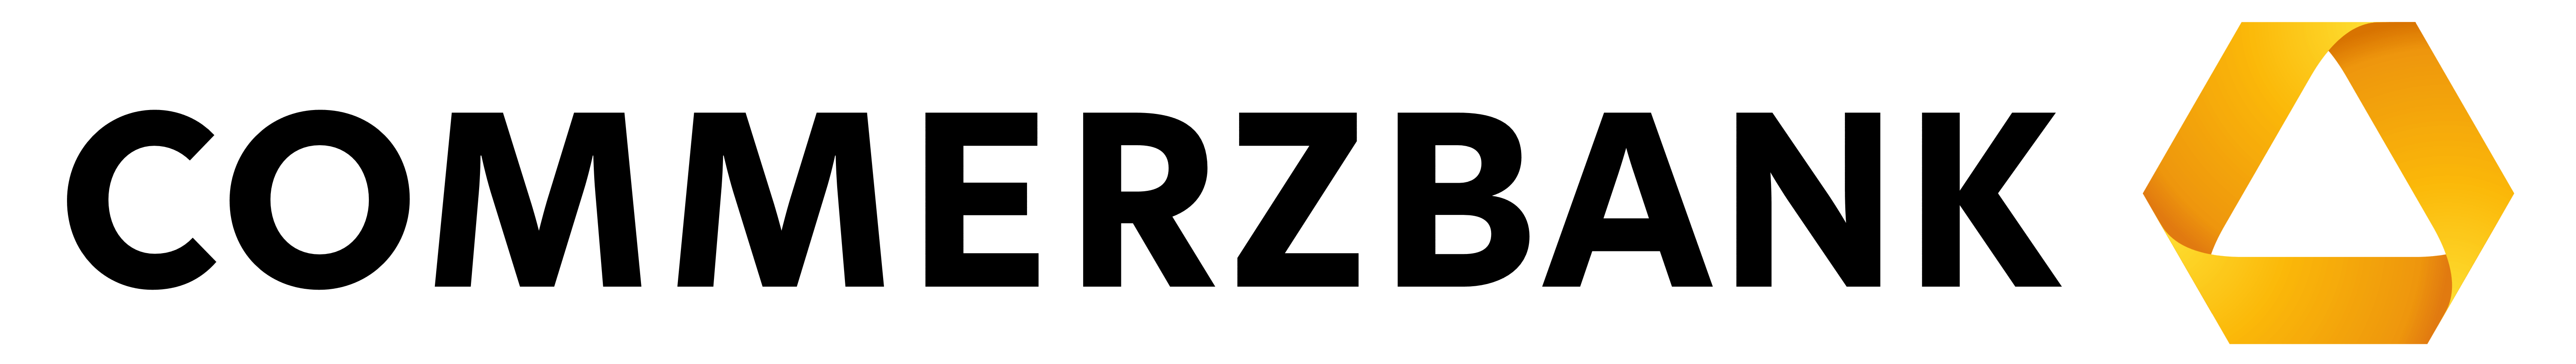 Commerzbank logo, logotype